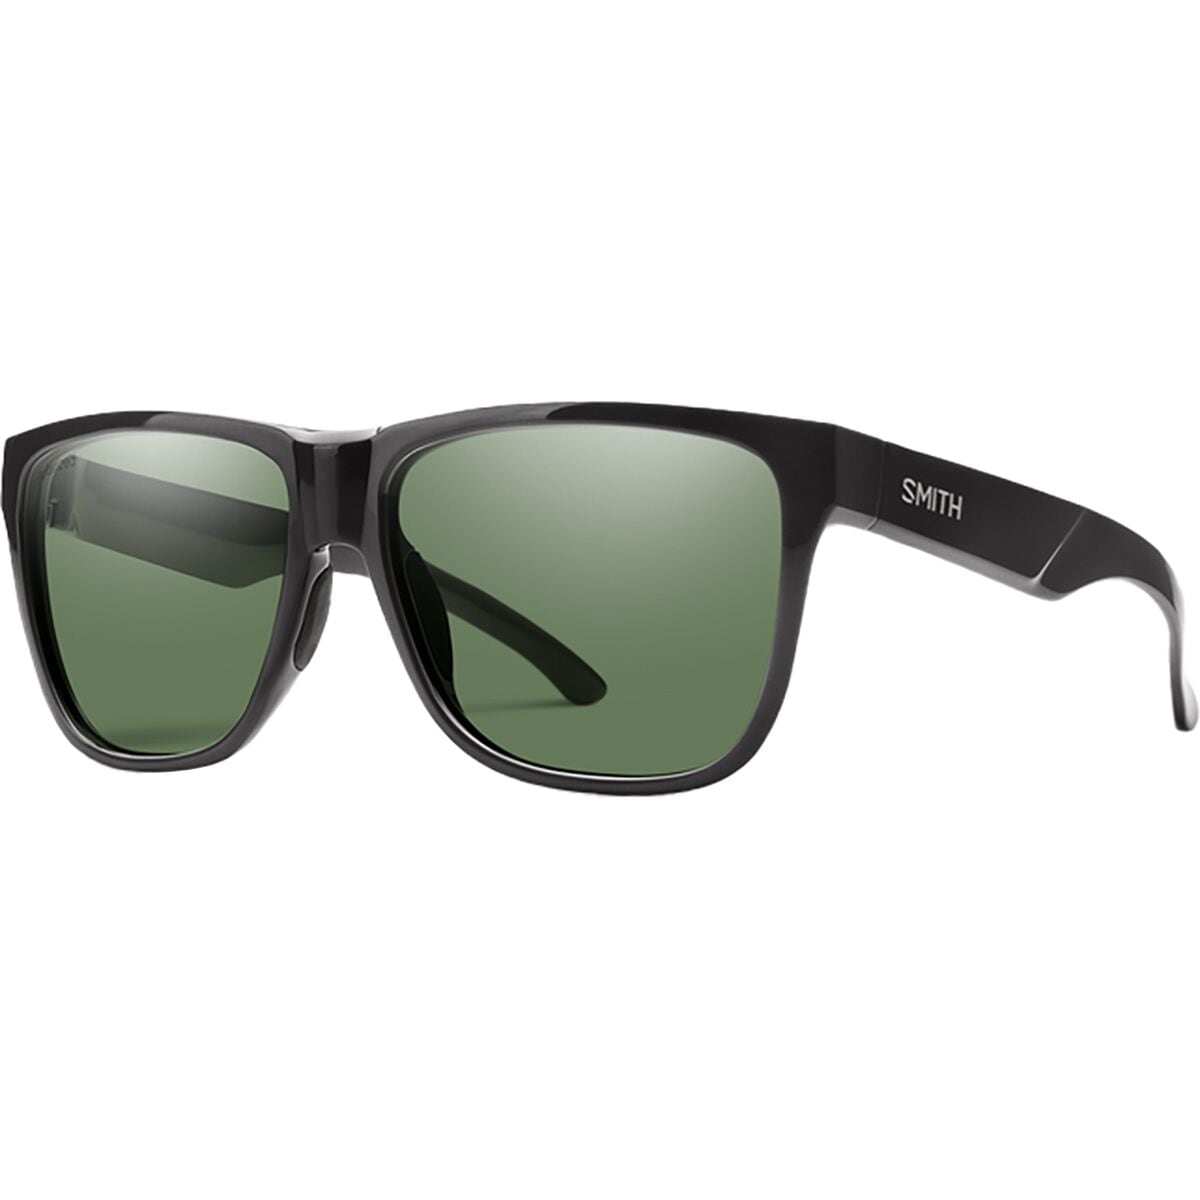 Поляризованные солнцезащитные очки lowdown xl 2 Smith, цвет black/gray green polarized